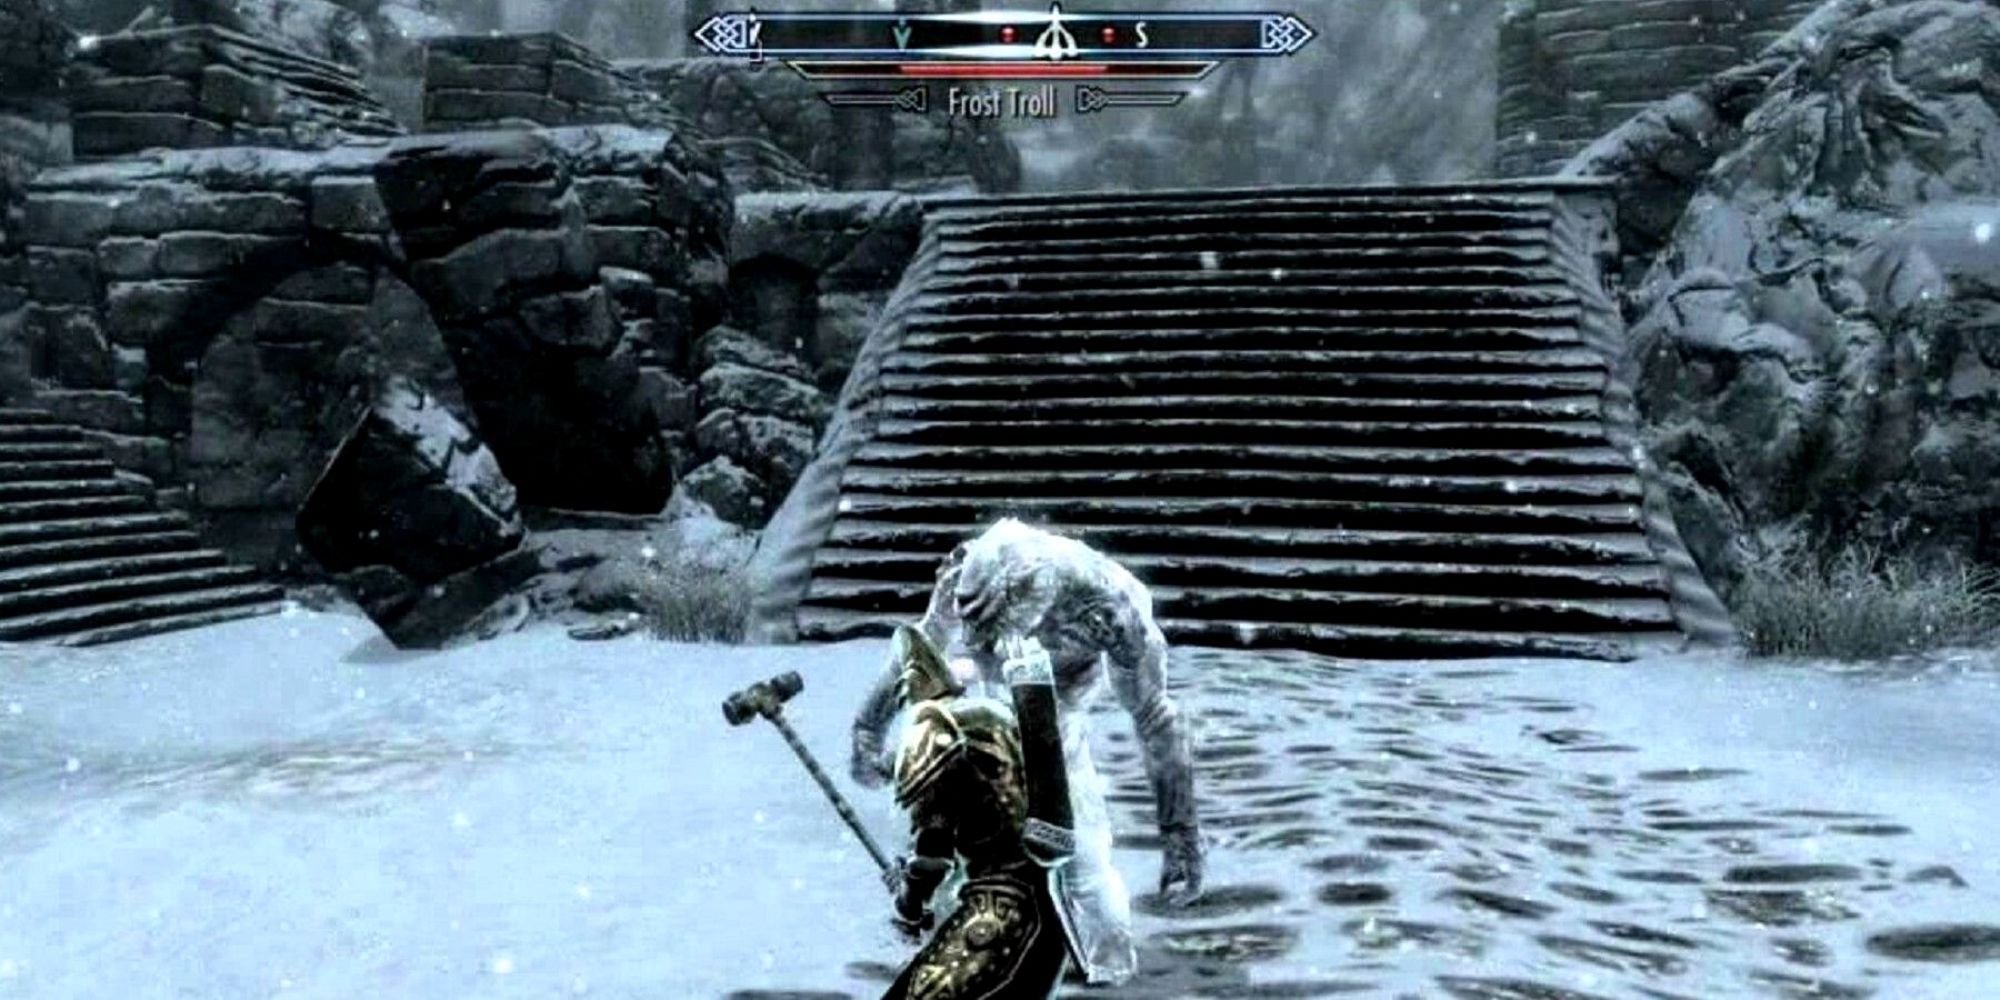 Fighting a Frost Troll in Skyrim